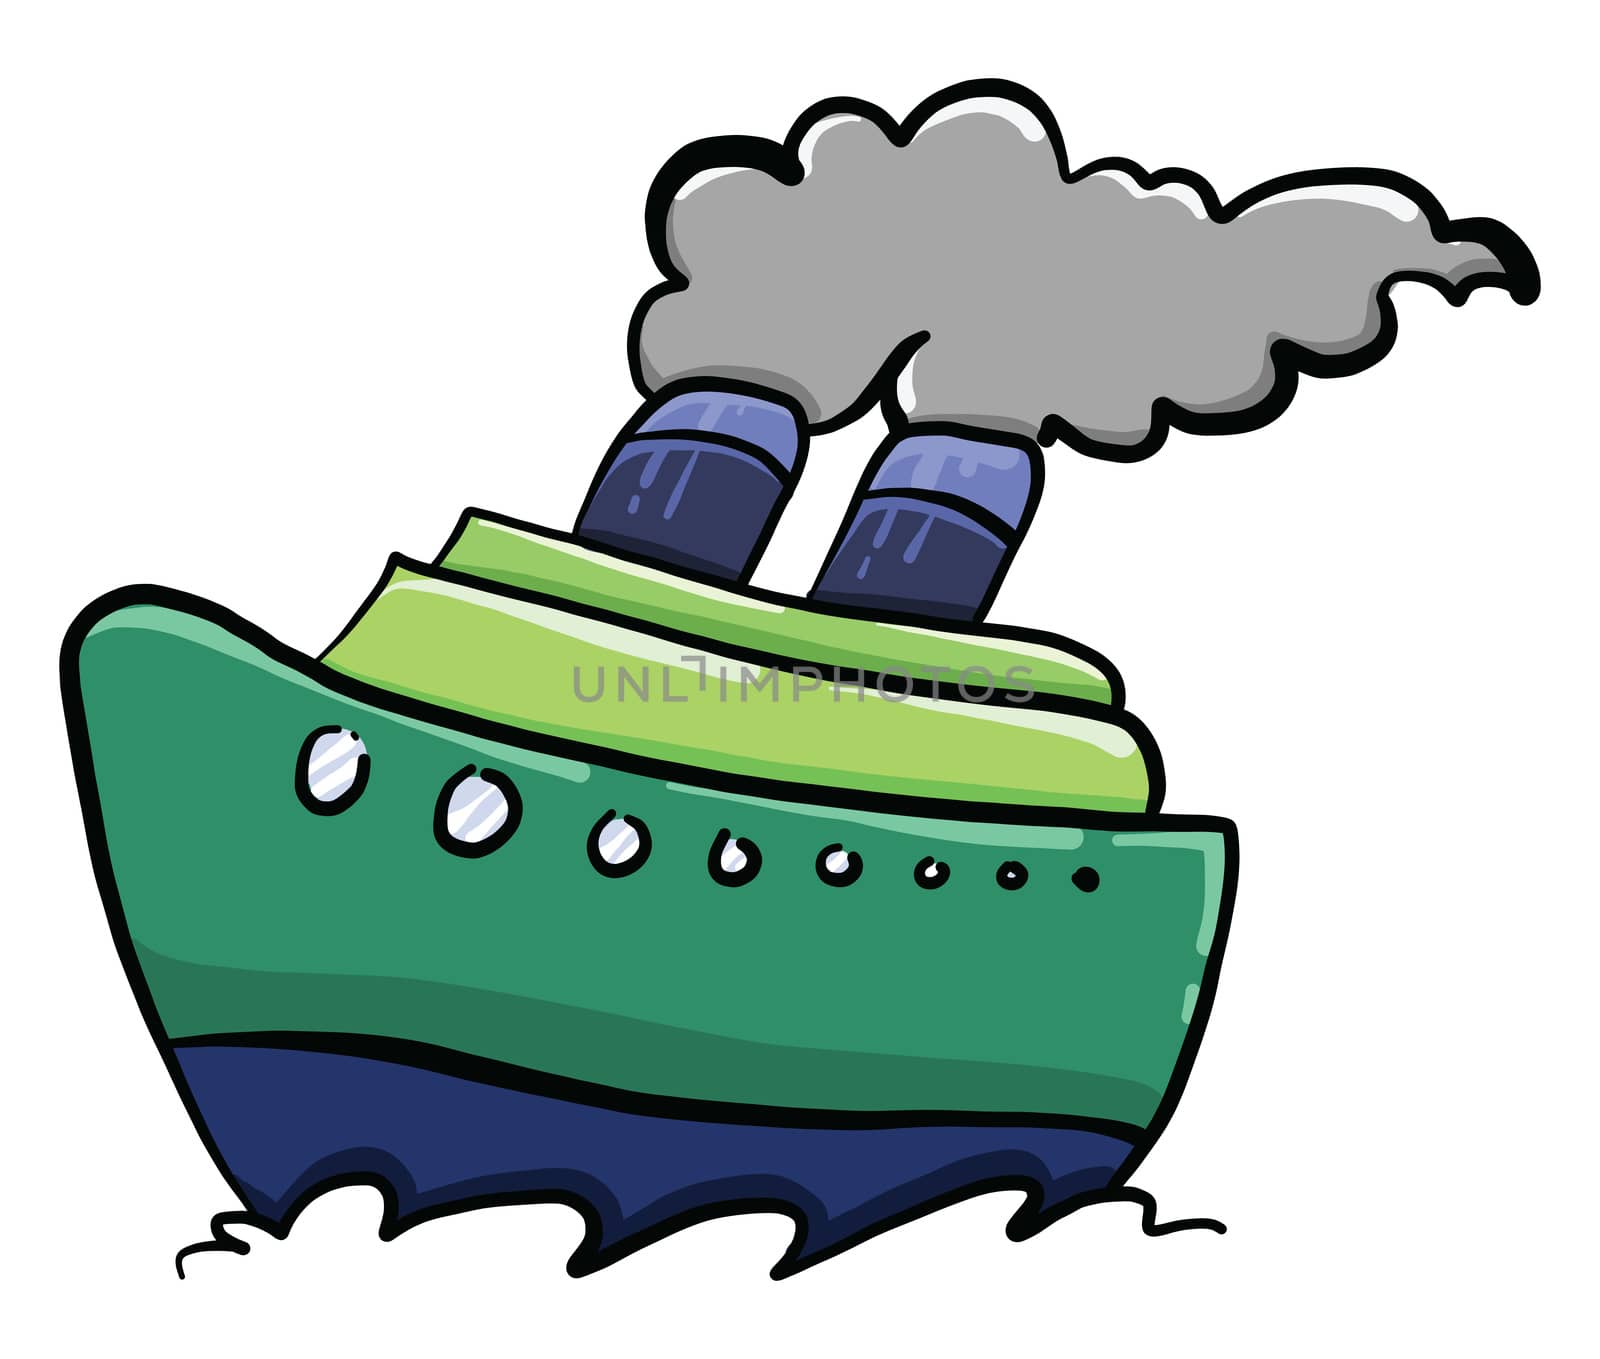 Green ship , illustration, vector on white background